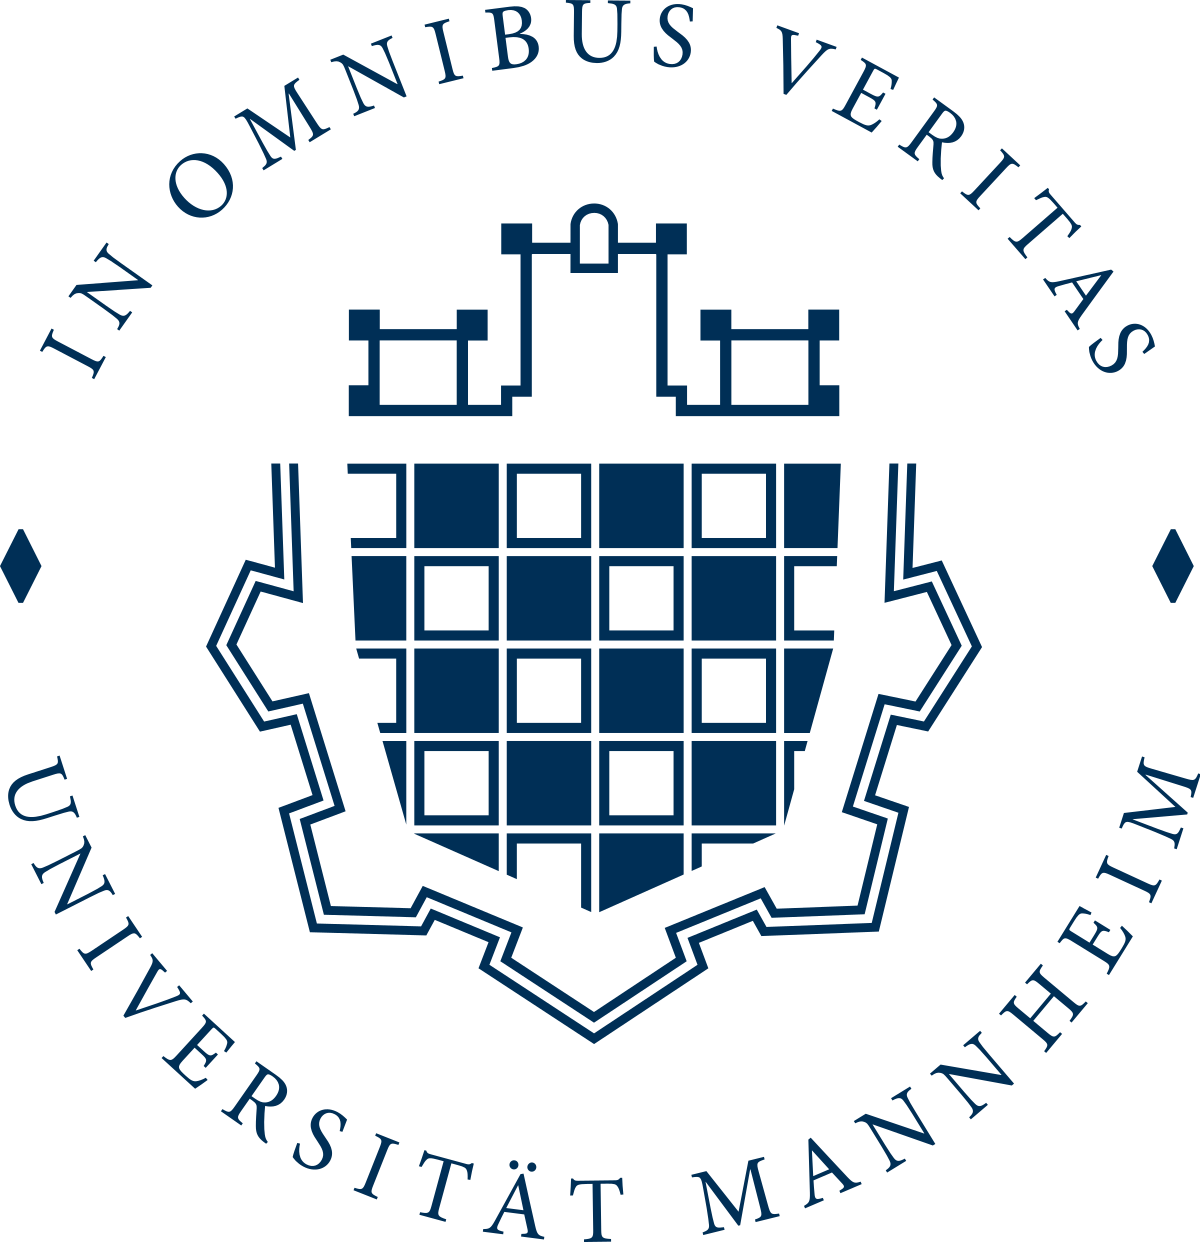 University of Mannheim Logo